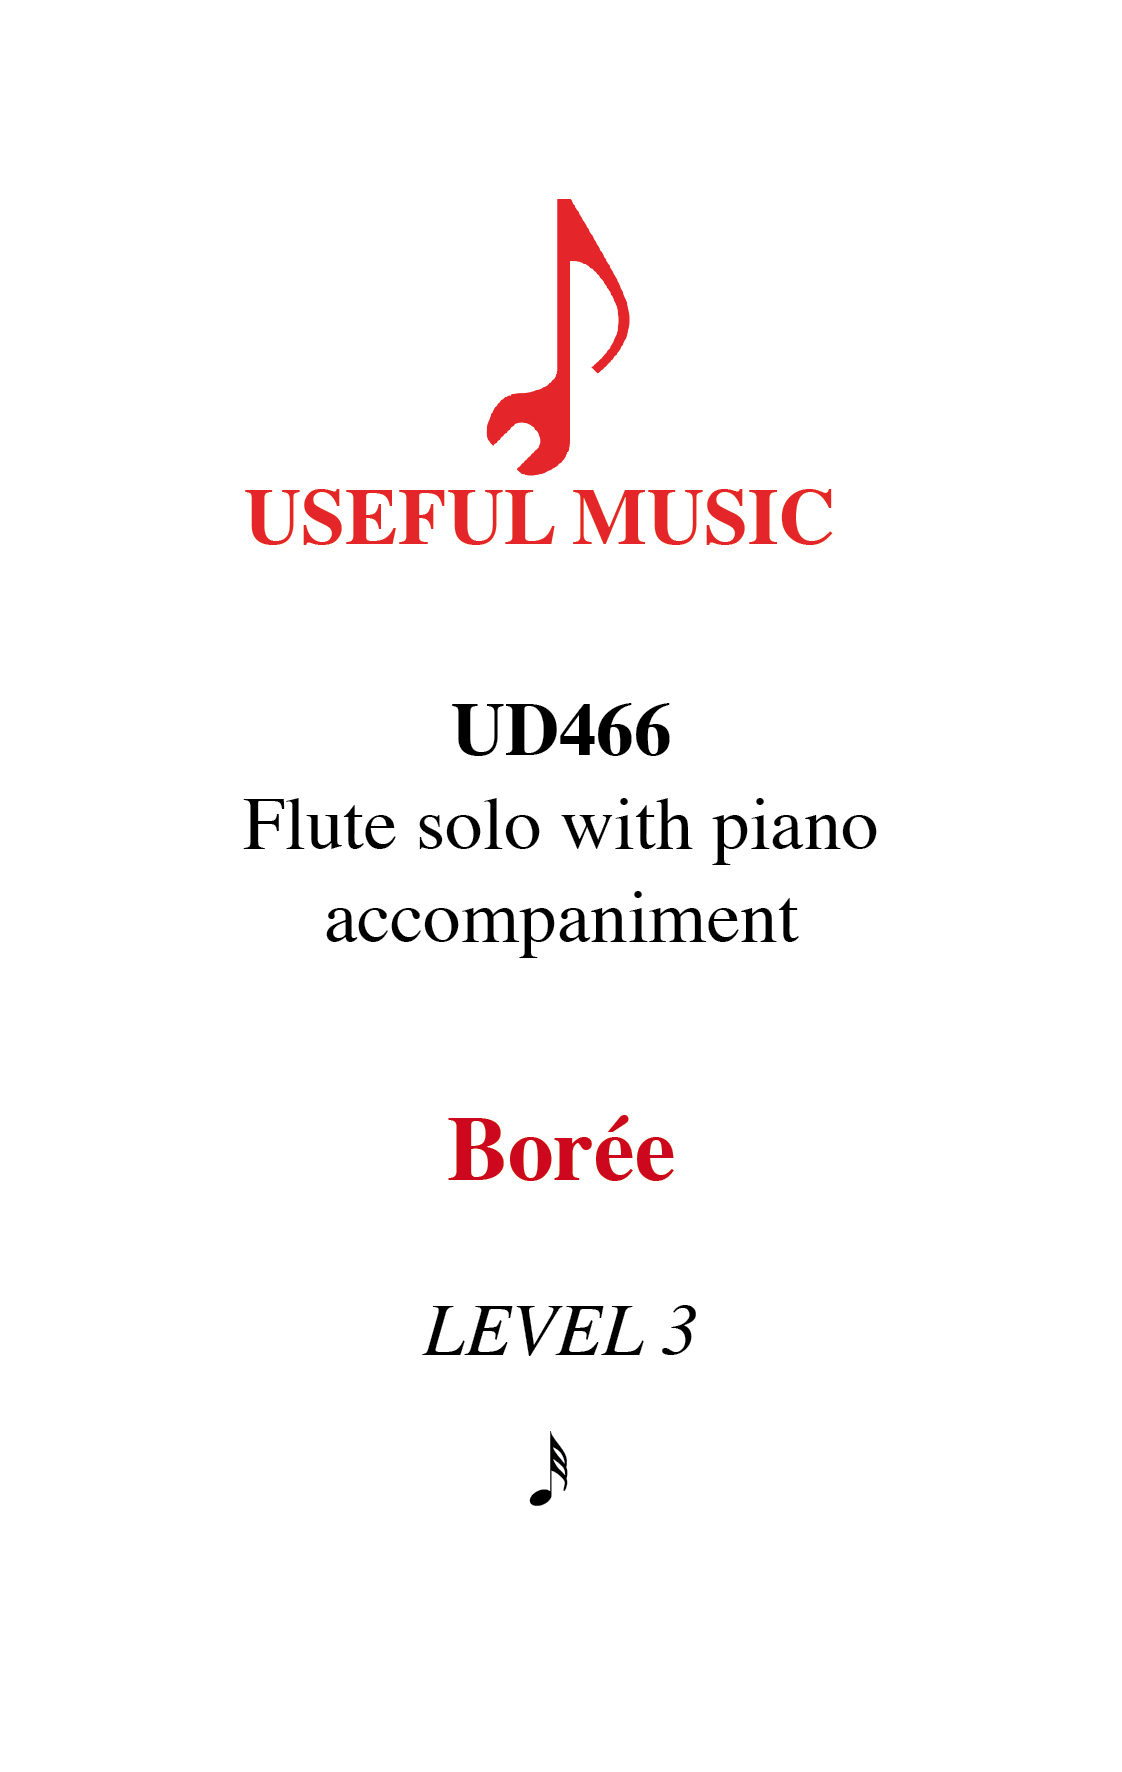 Boree - flute with piano accompaniment